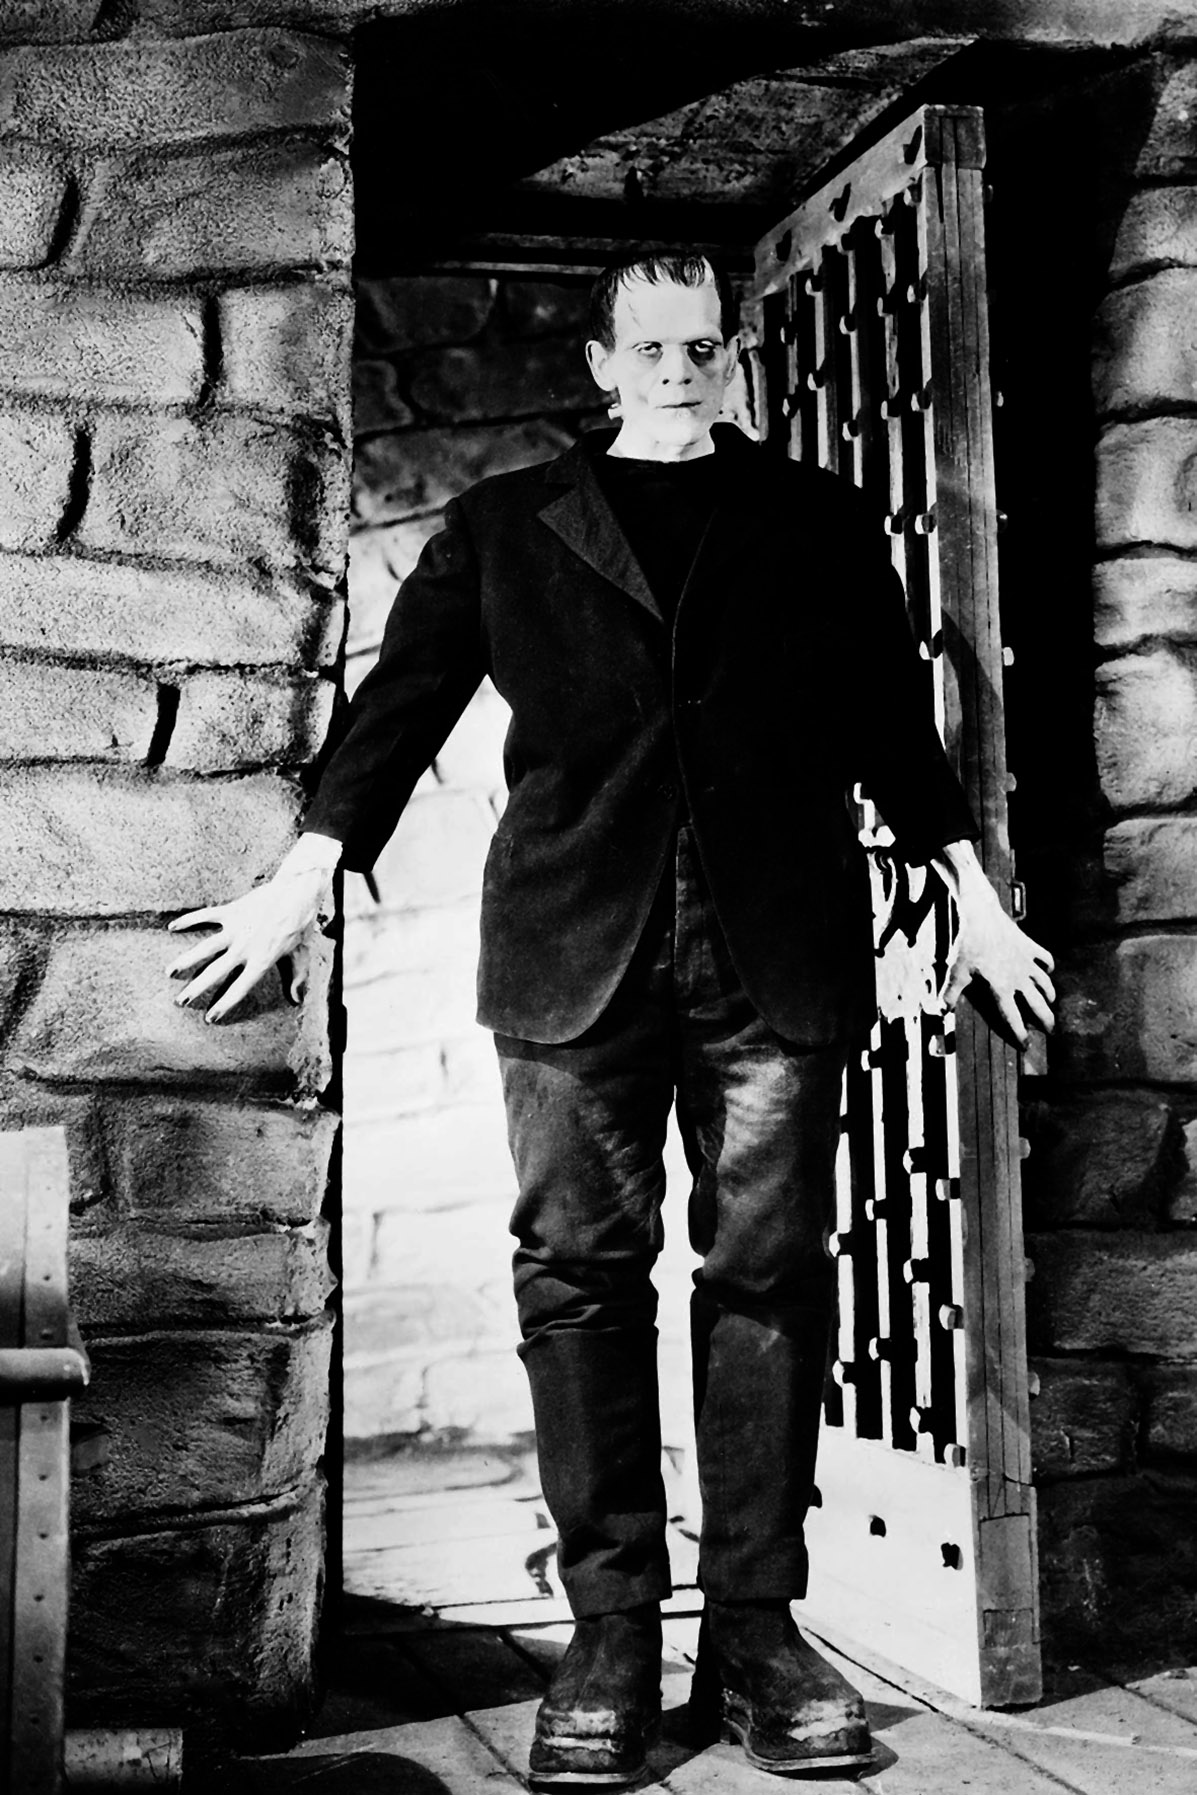  Frankenstein de James Whale © 1931 Universal Studios. Renewed 1959 Universal Studios/All Rights Reserved